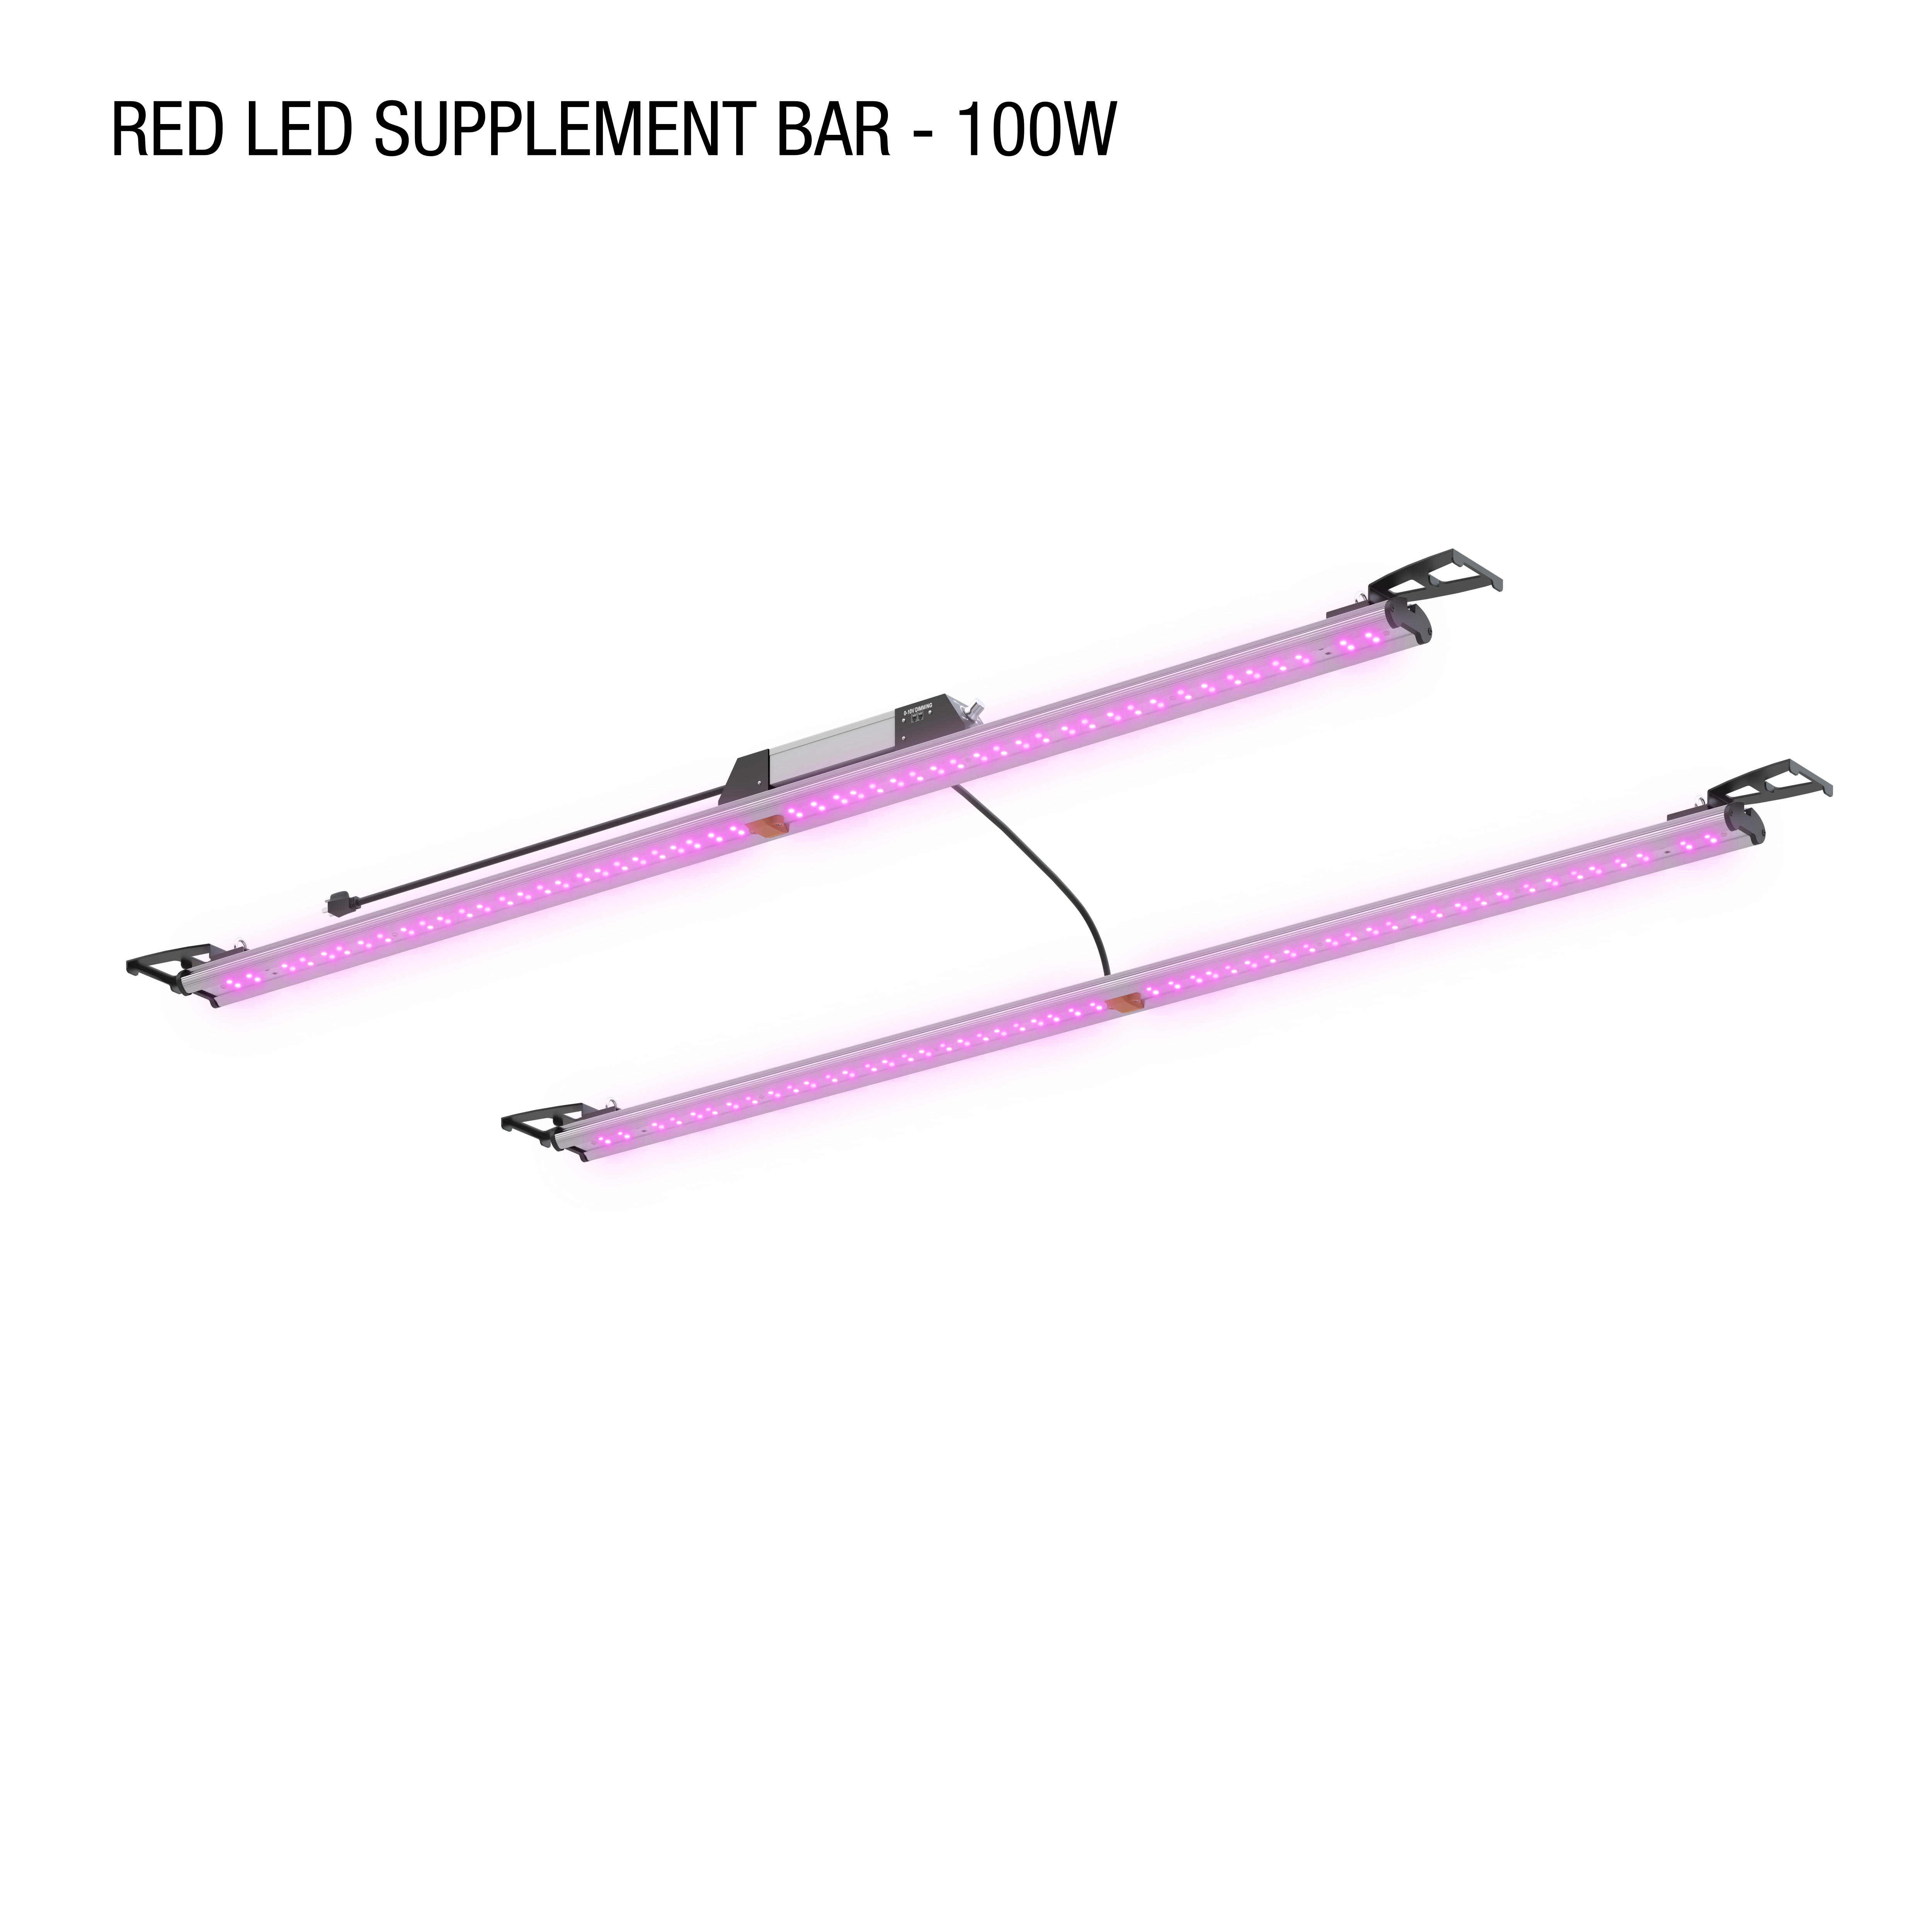 660NM Red Supplemental Spectrum Light bar - 100W